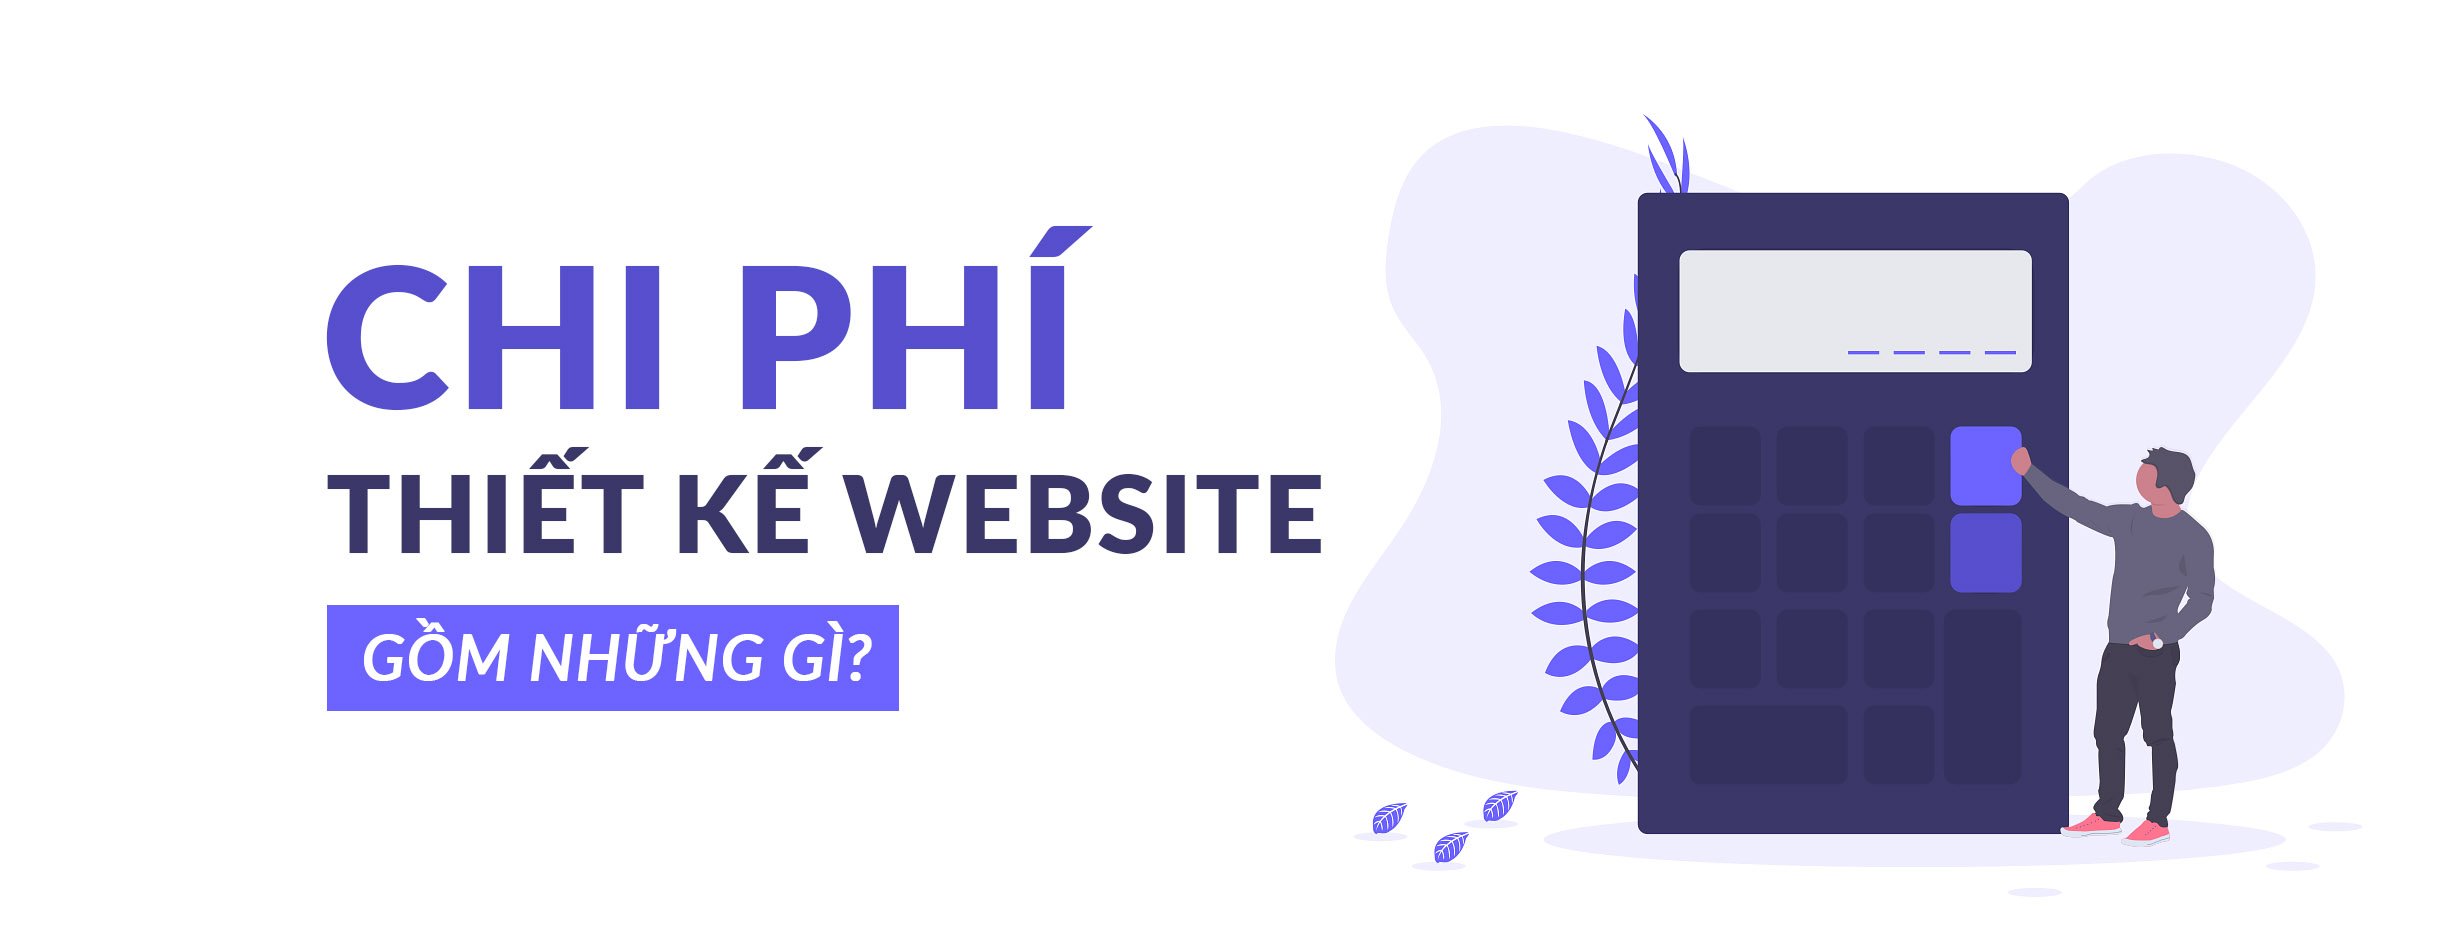 chi phi thiet ke website